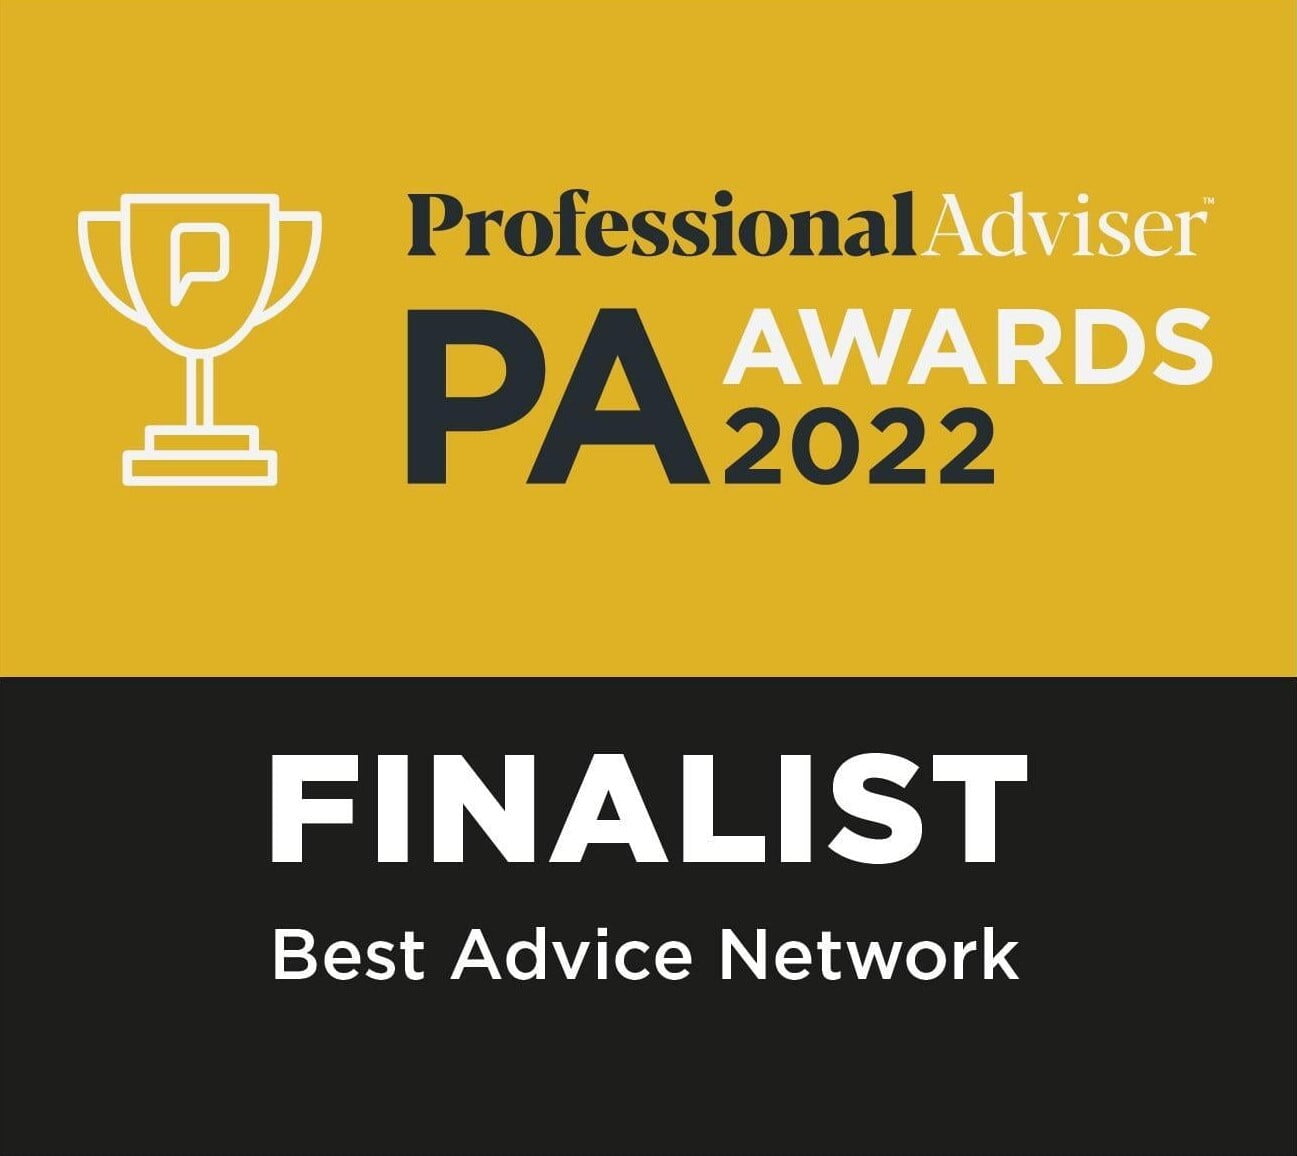 Professional Adviser Awards 2022: Finalist - Best Advice Network